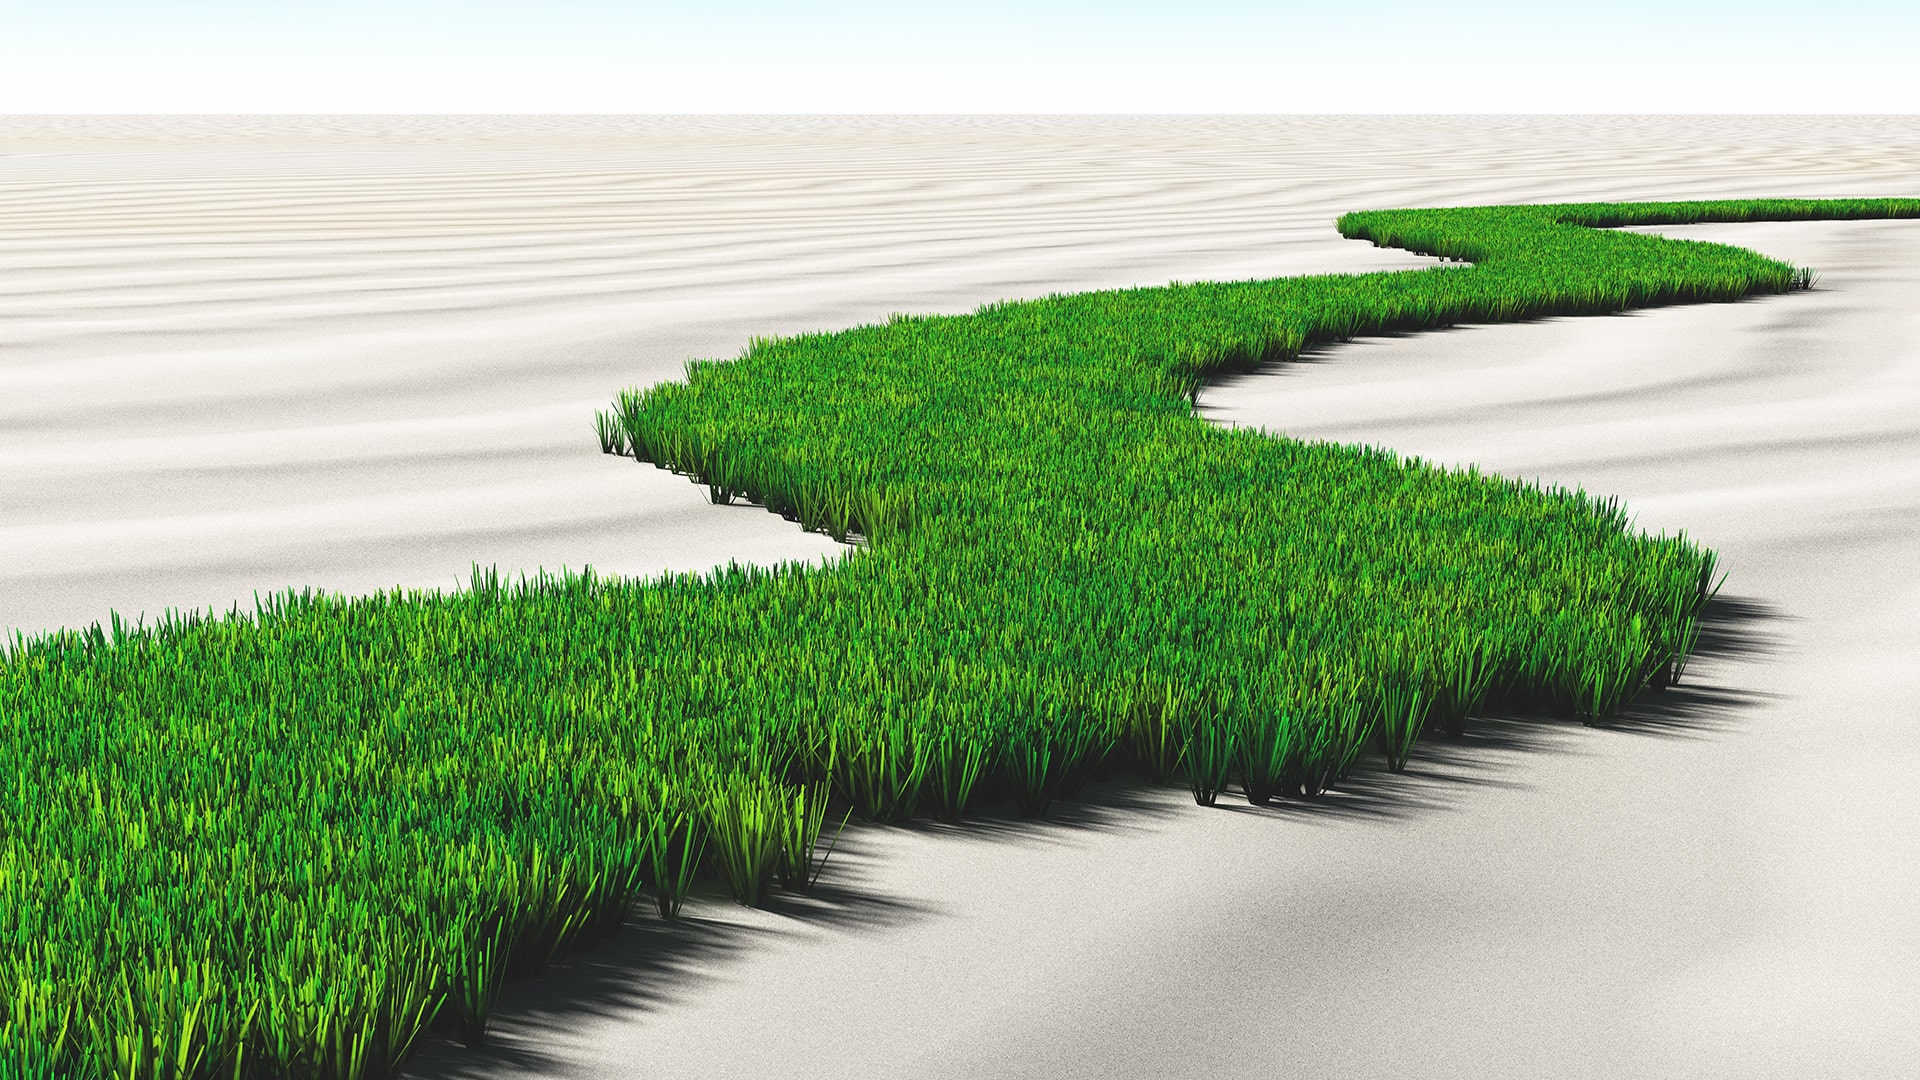 Grass Path in the Desert